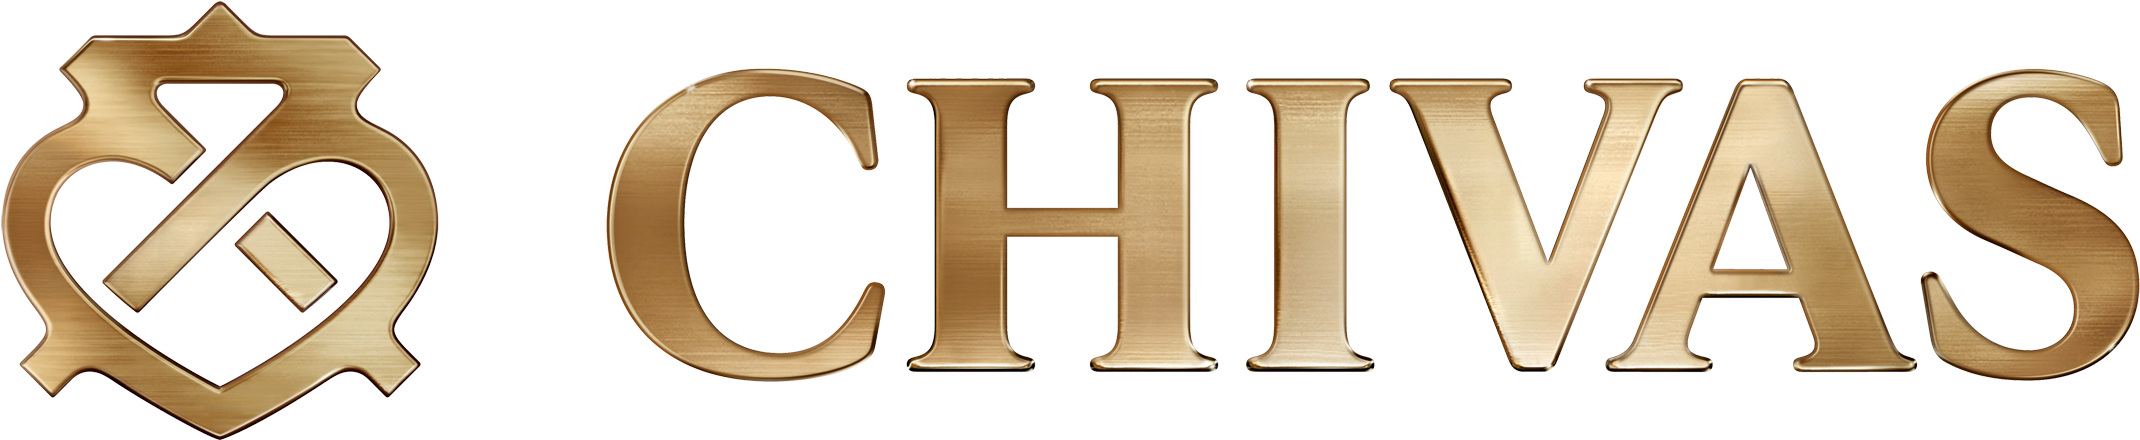 Chivas logo imagen Transparente